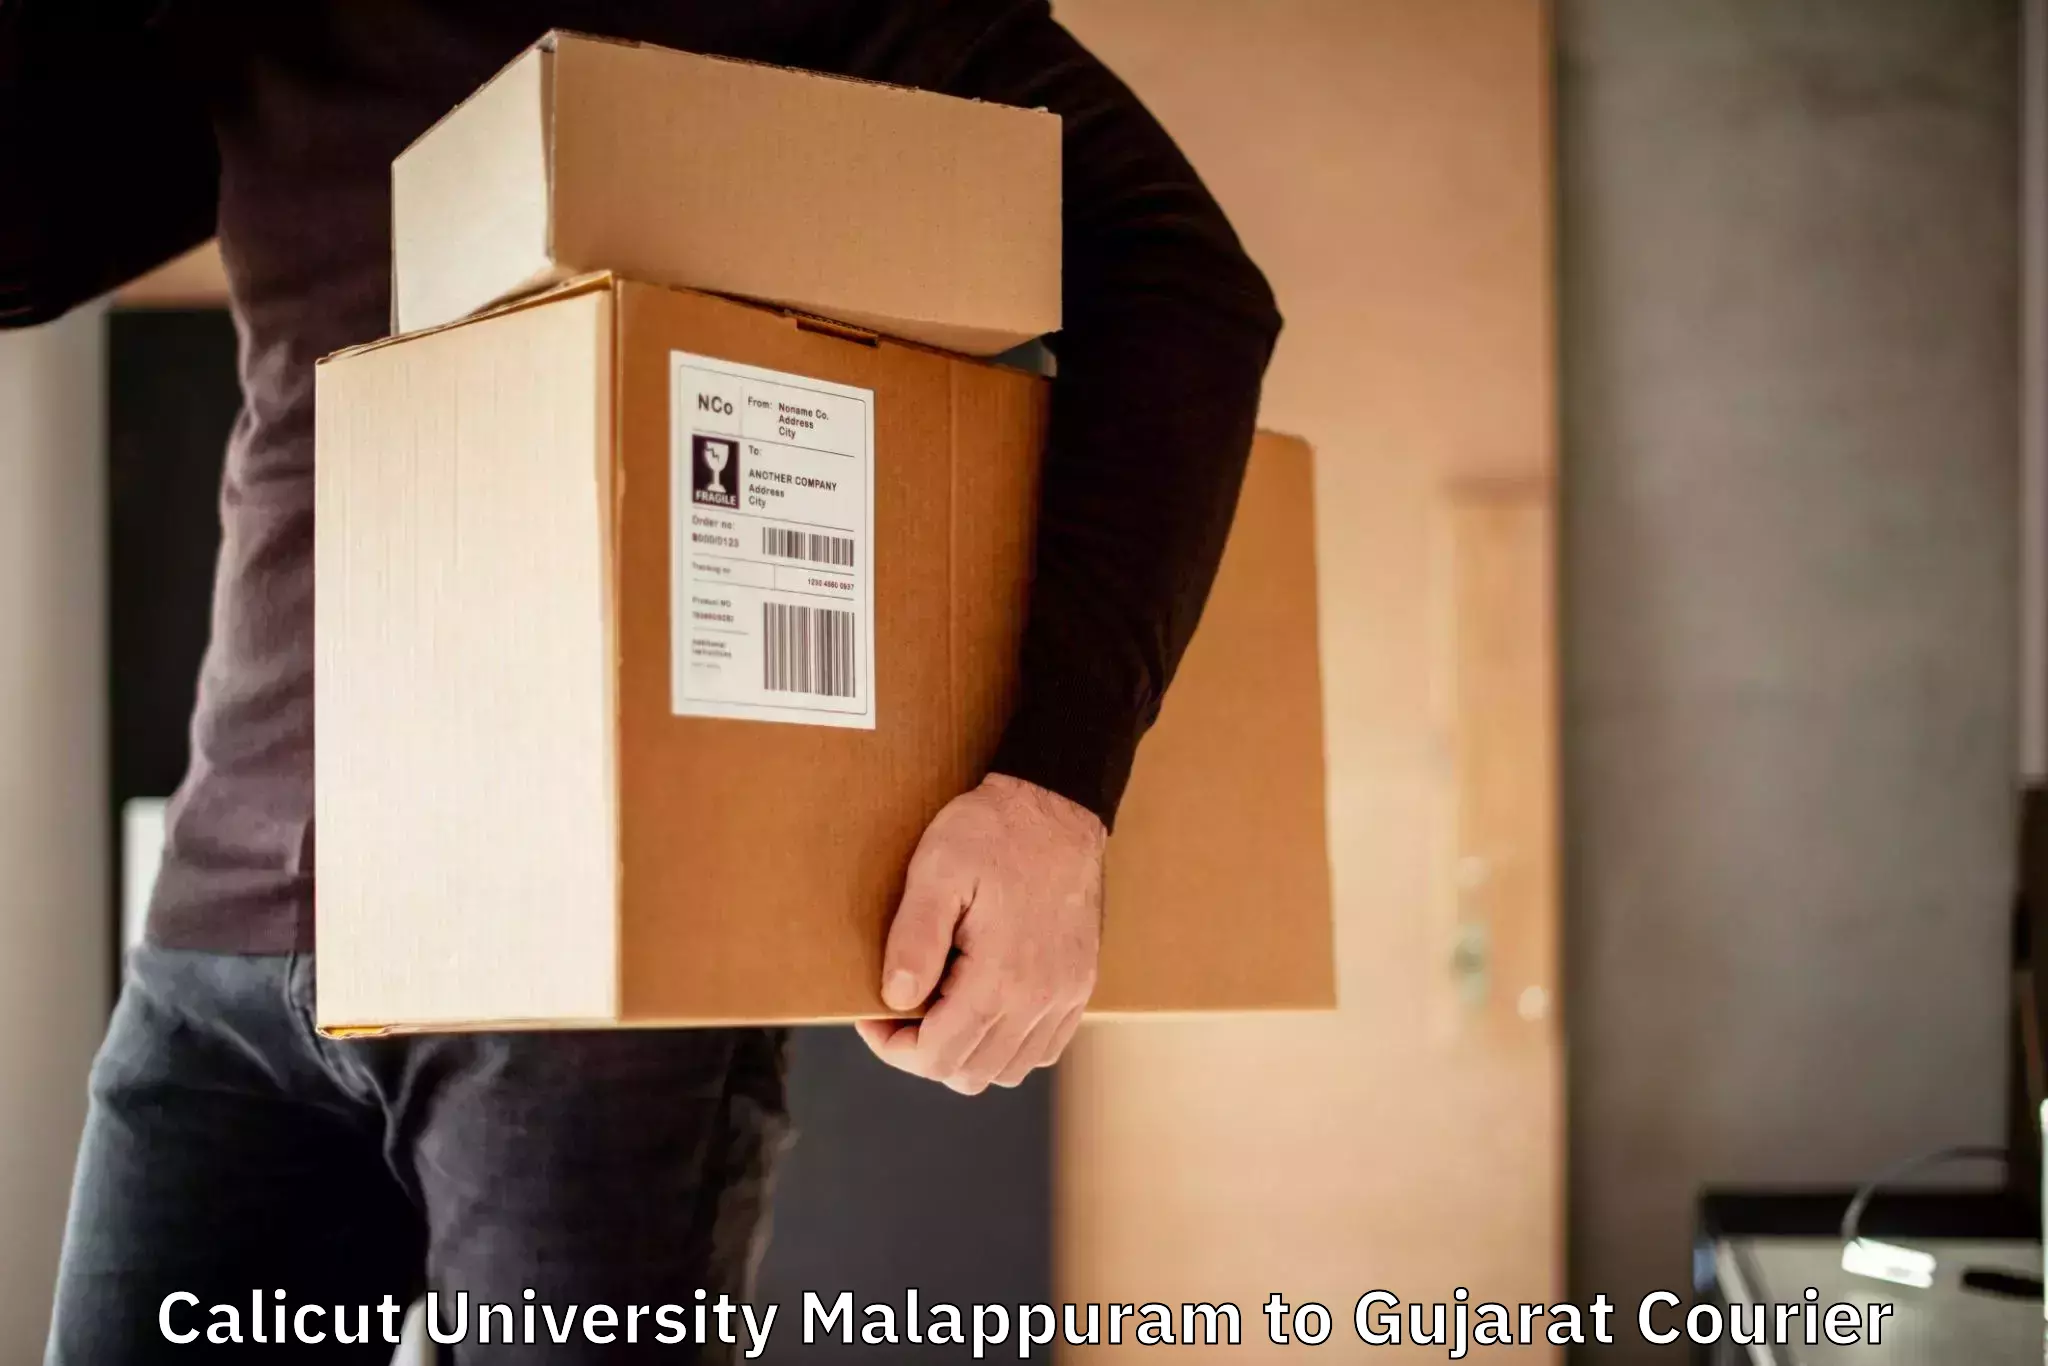 Nationwide parcel services Calicut University Malappuram to Gujarat